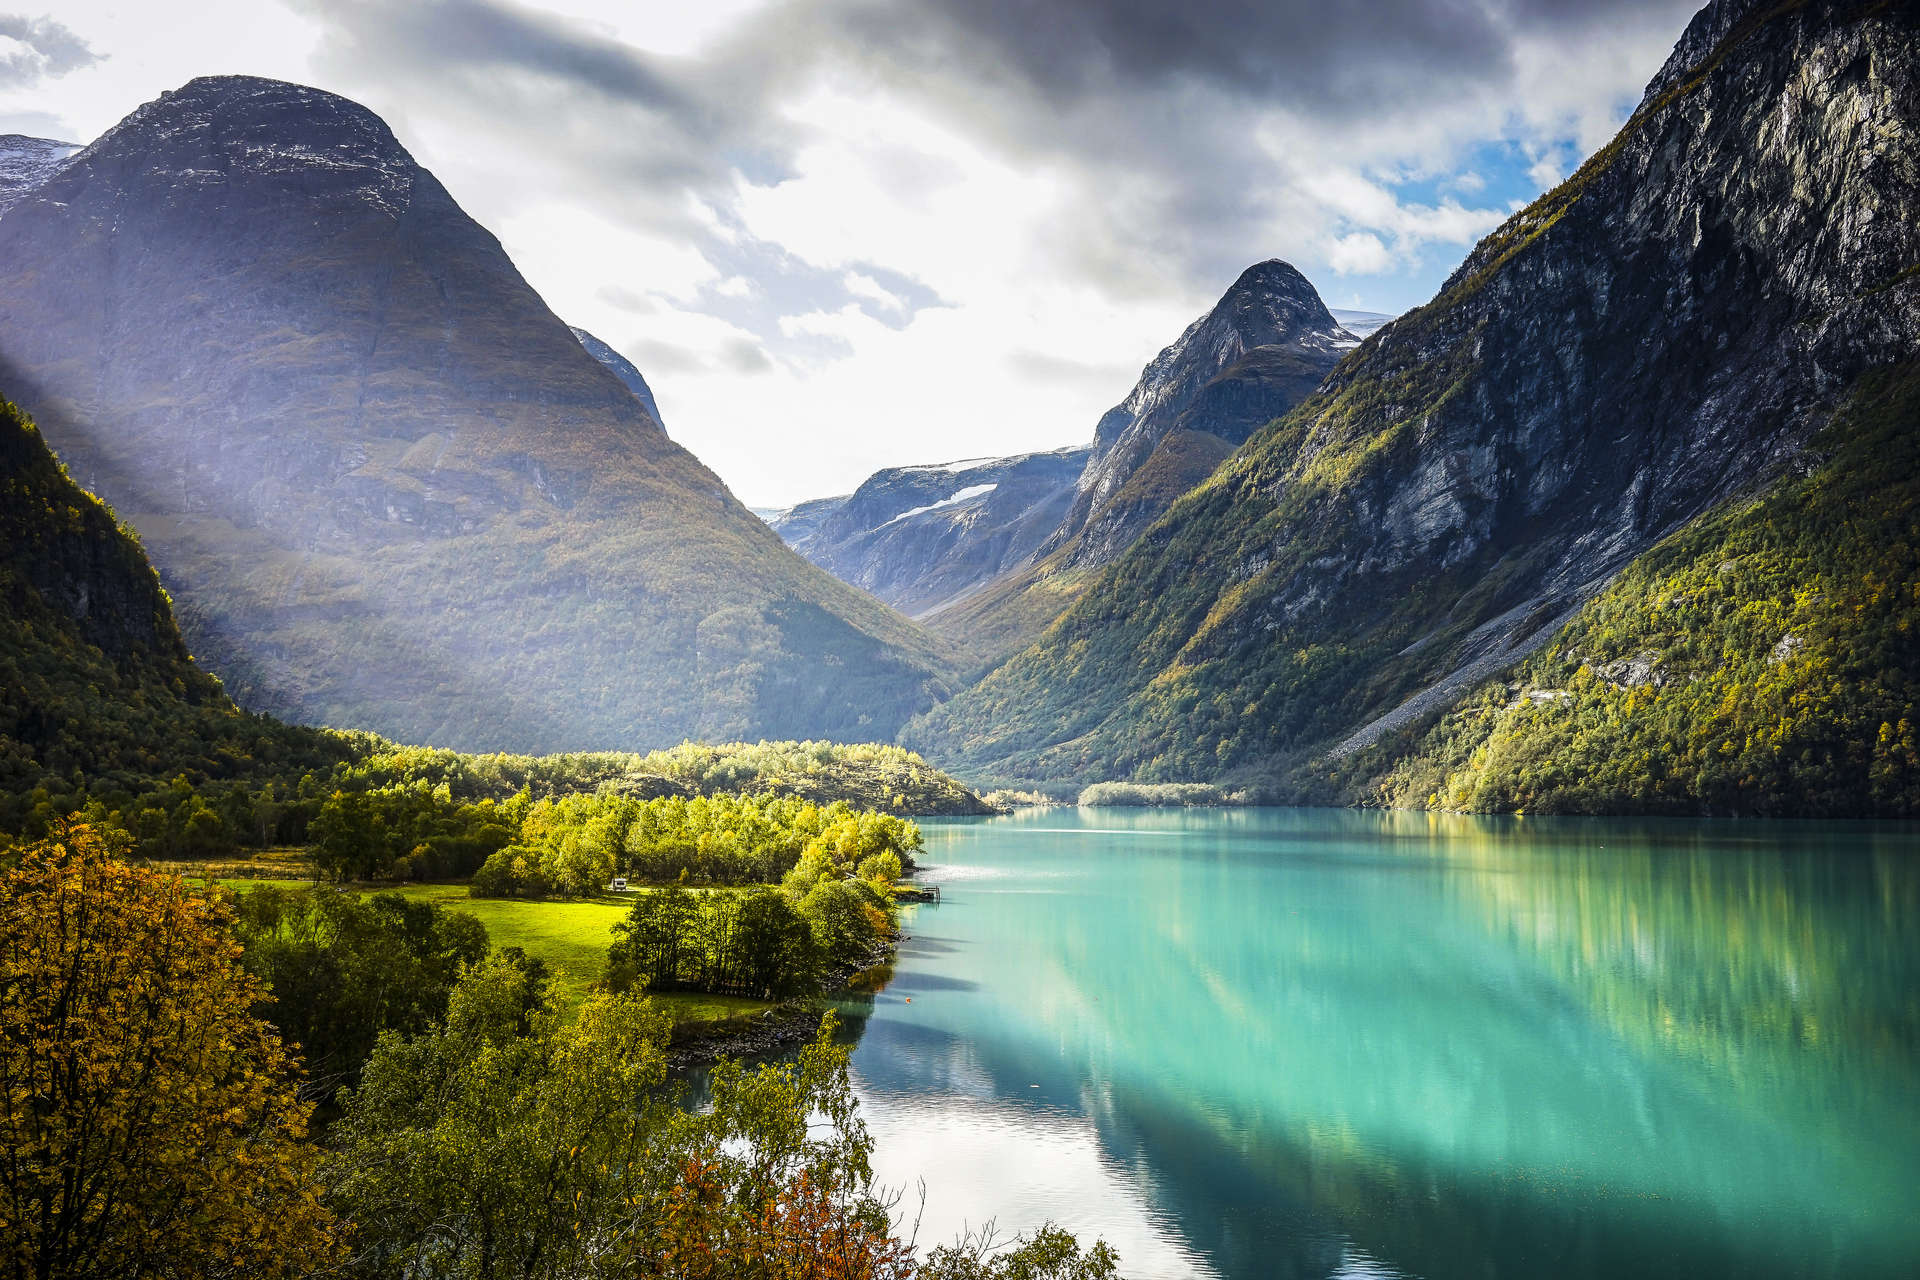 Norway has a wealth of natural wonders